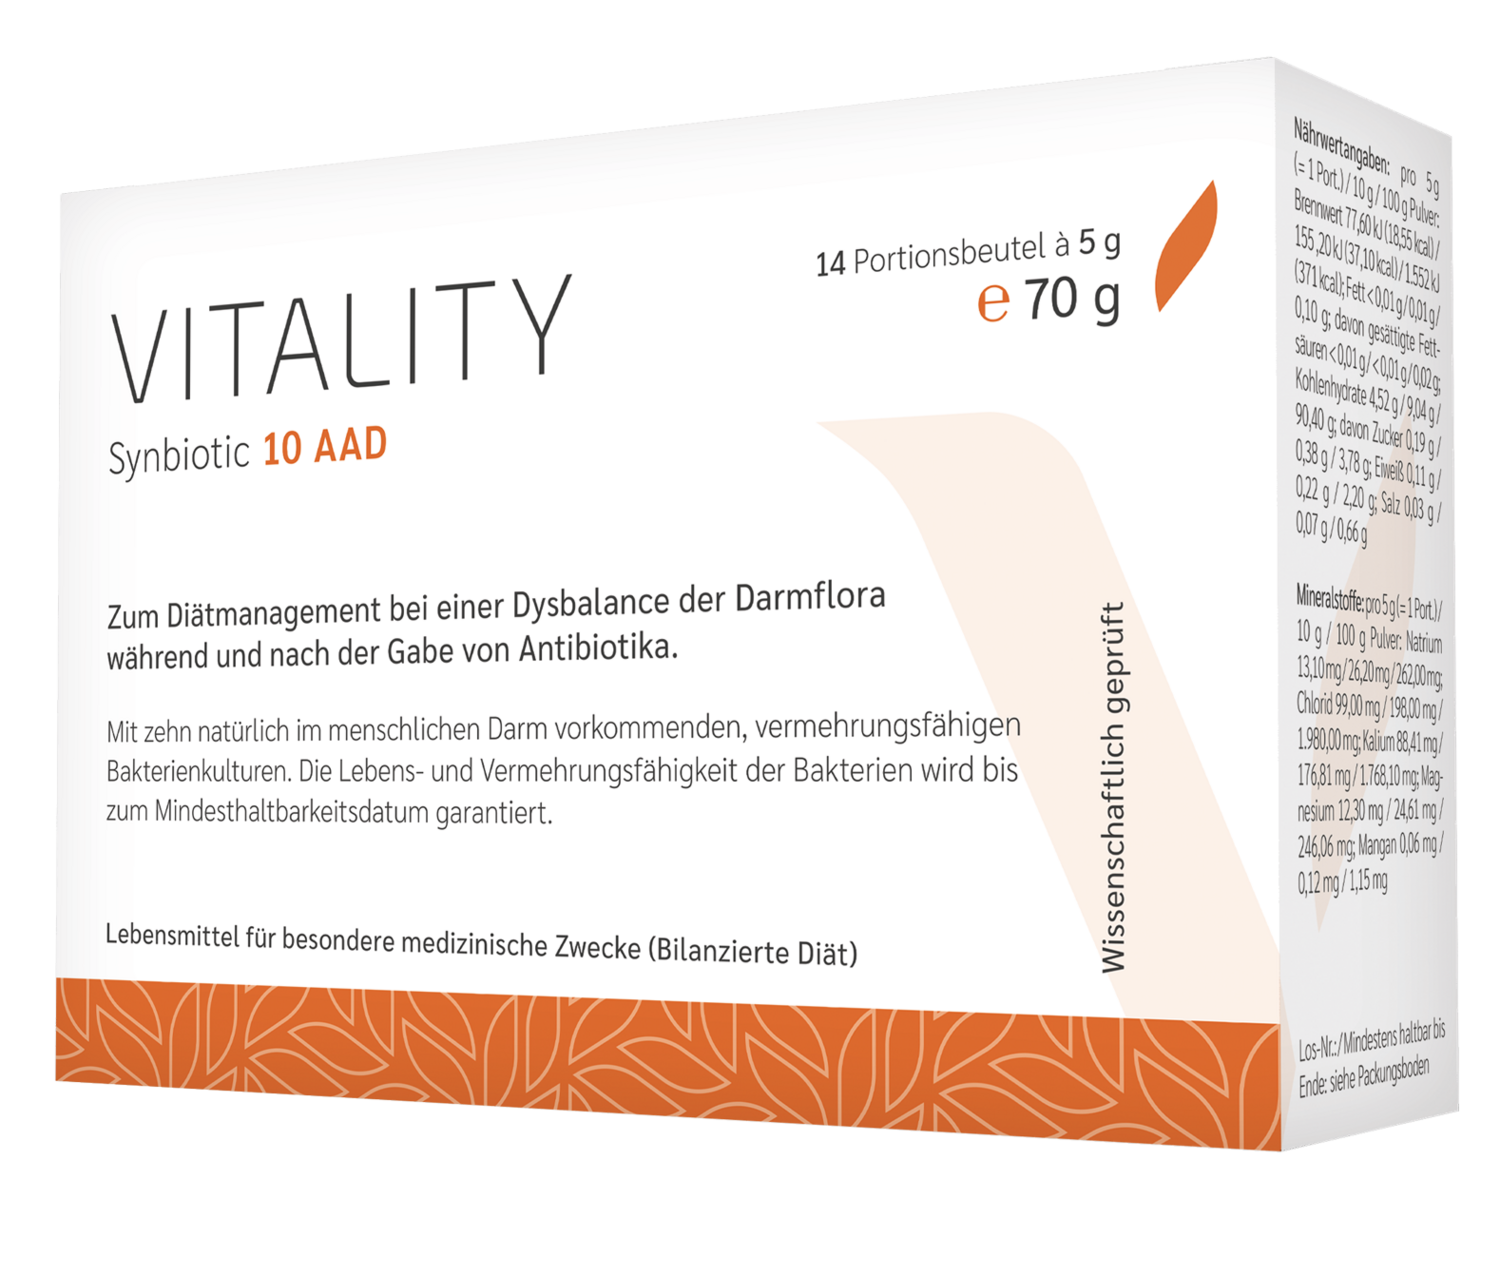 VITALITY Synbiotic 10 AAD /
Das Pro zum Antibiotikum / 14 Beutel à 5 g